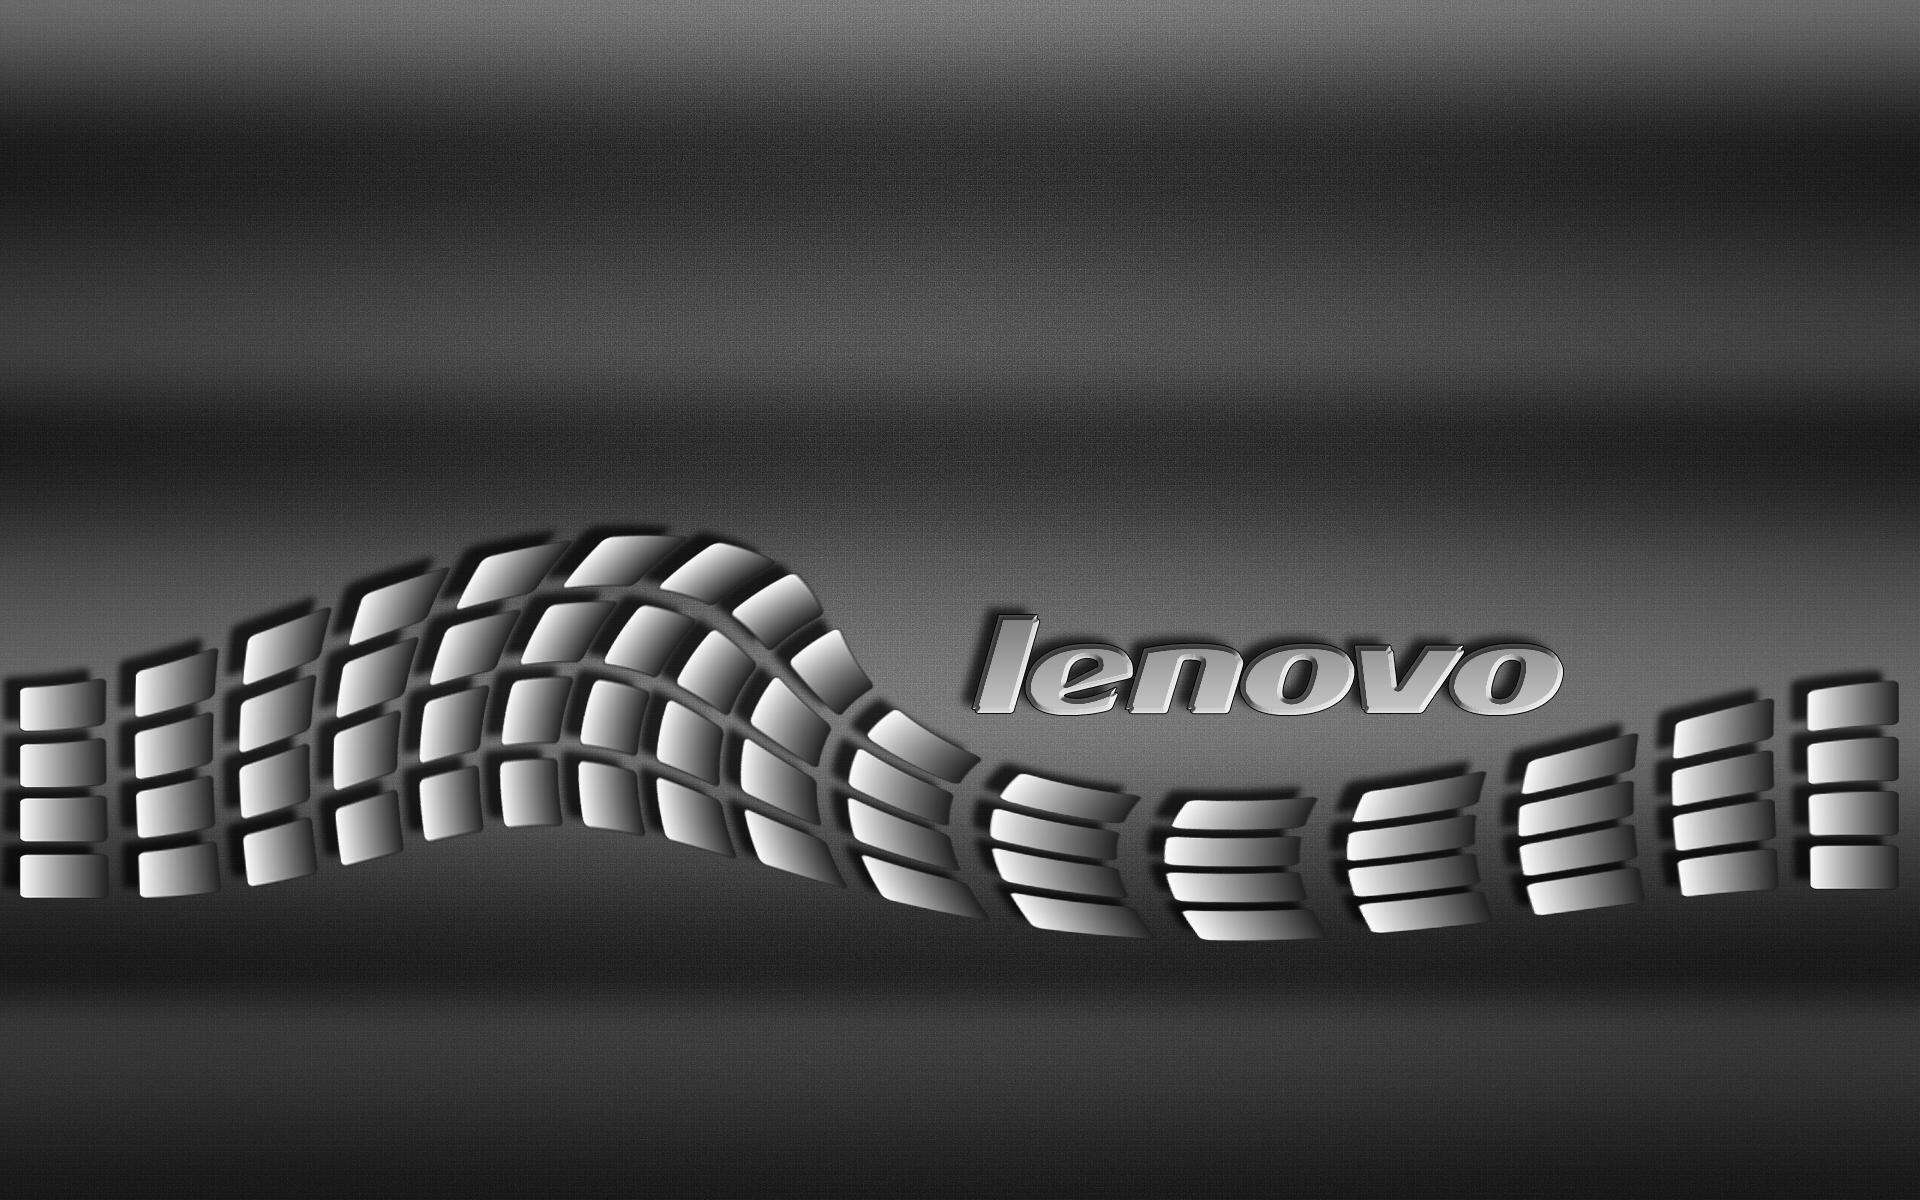 Lenovo Wallpaper 1080P on WallpaperSafari